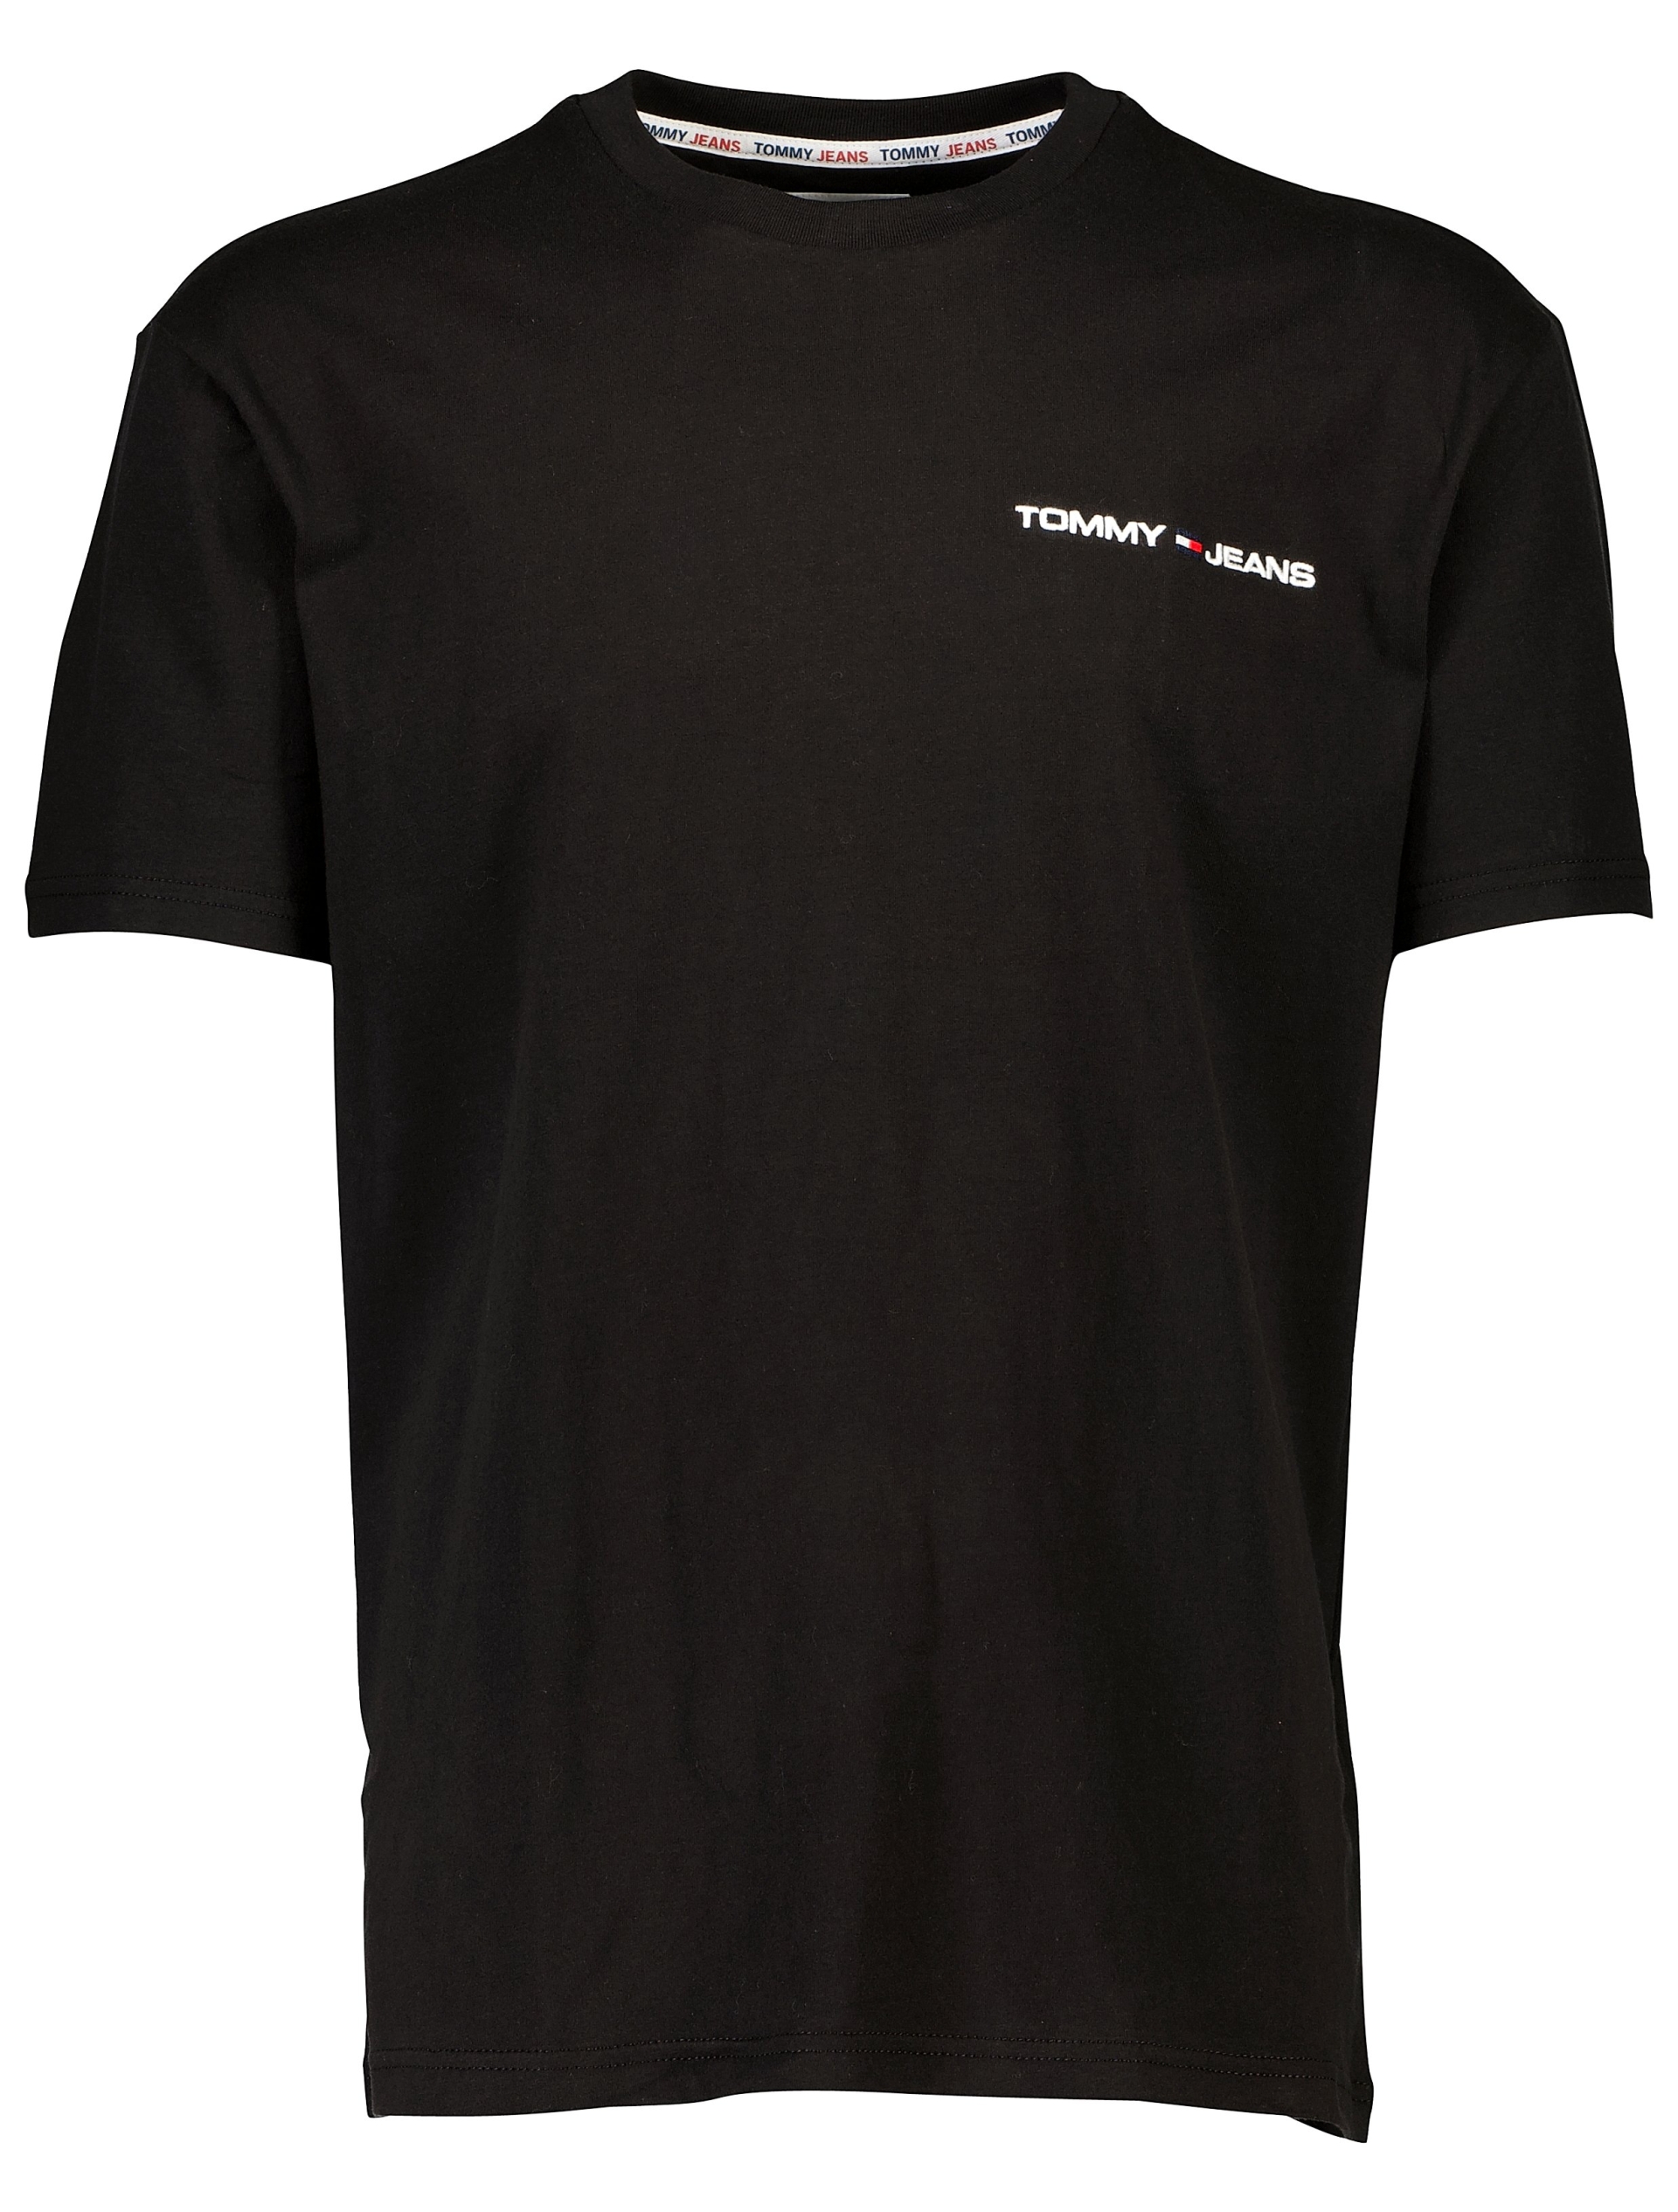 Tommy Jeans T-shirt sort / bds black